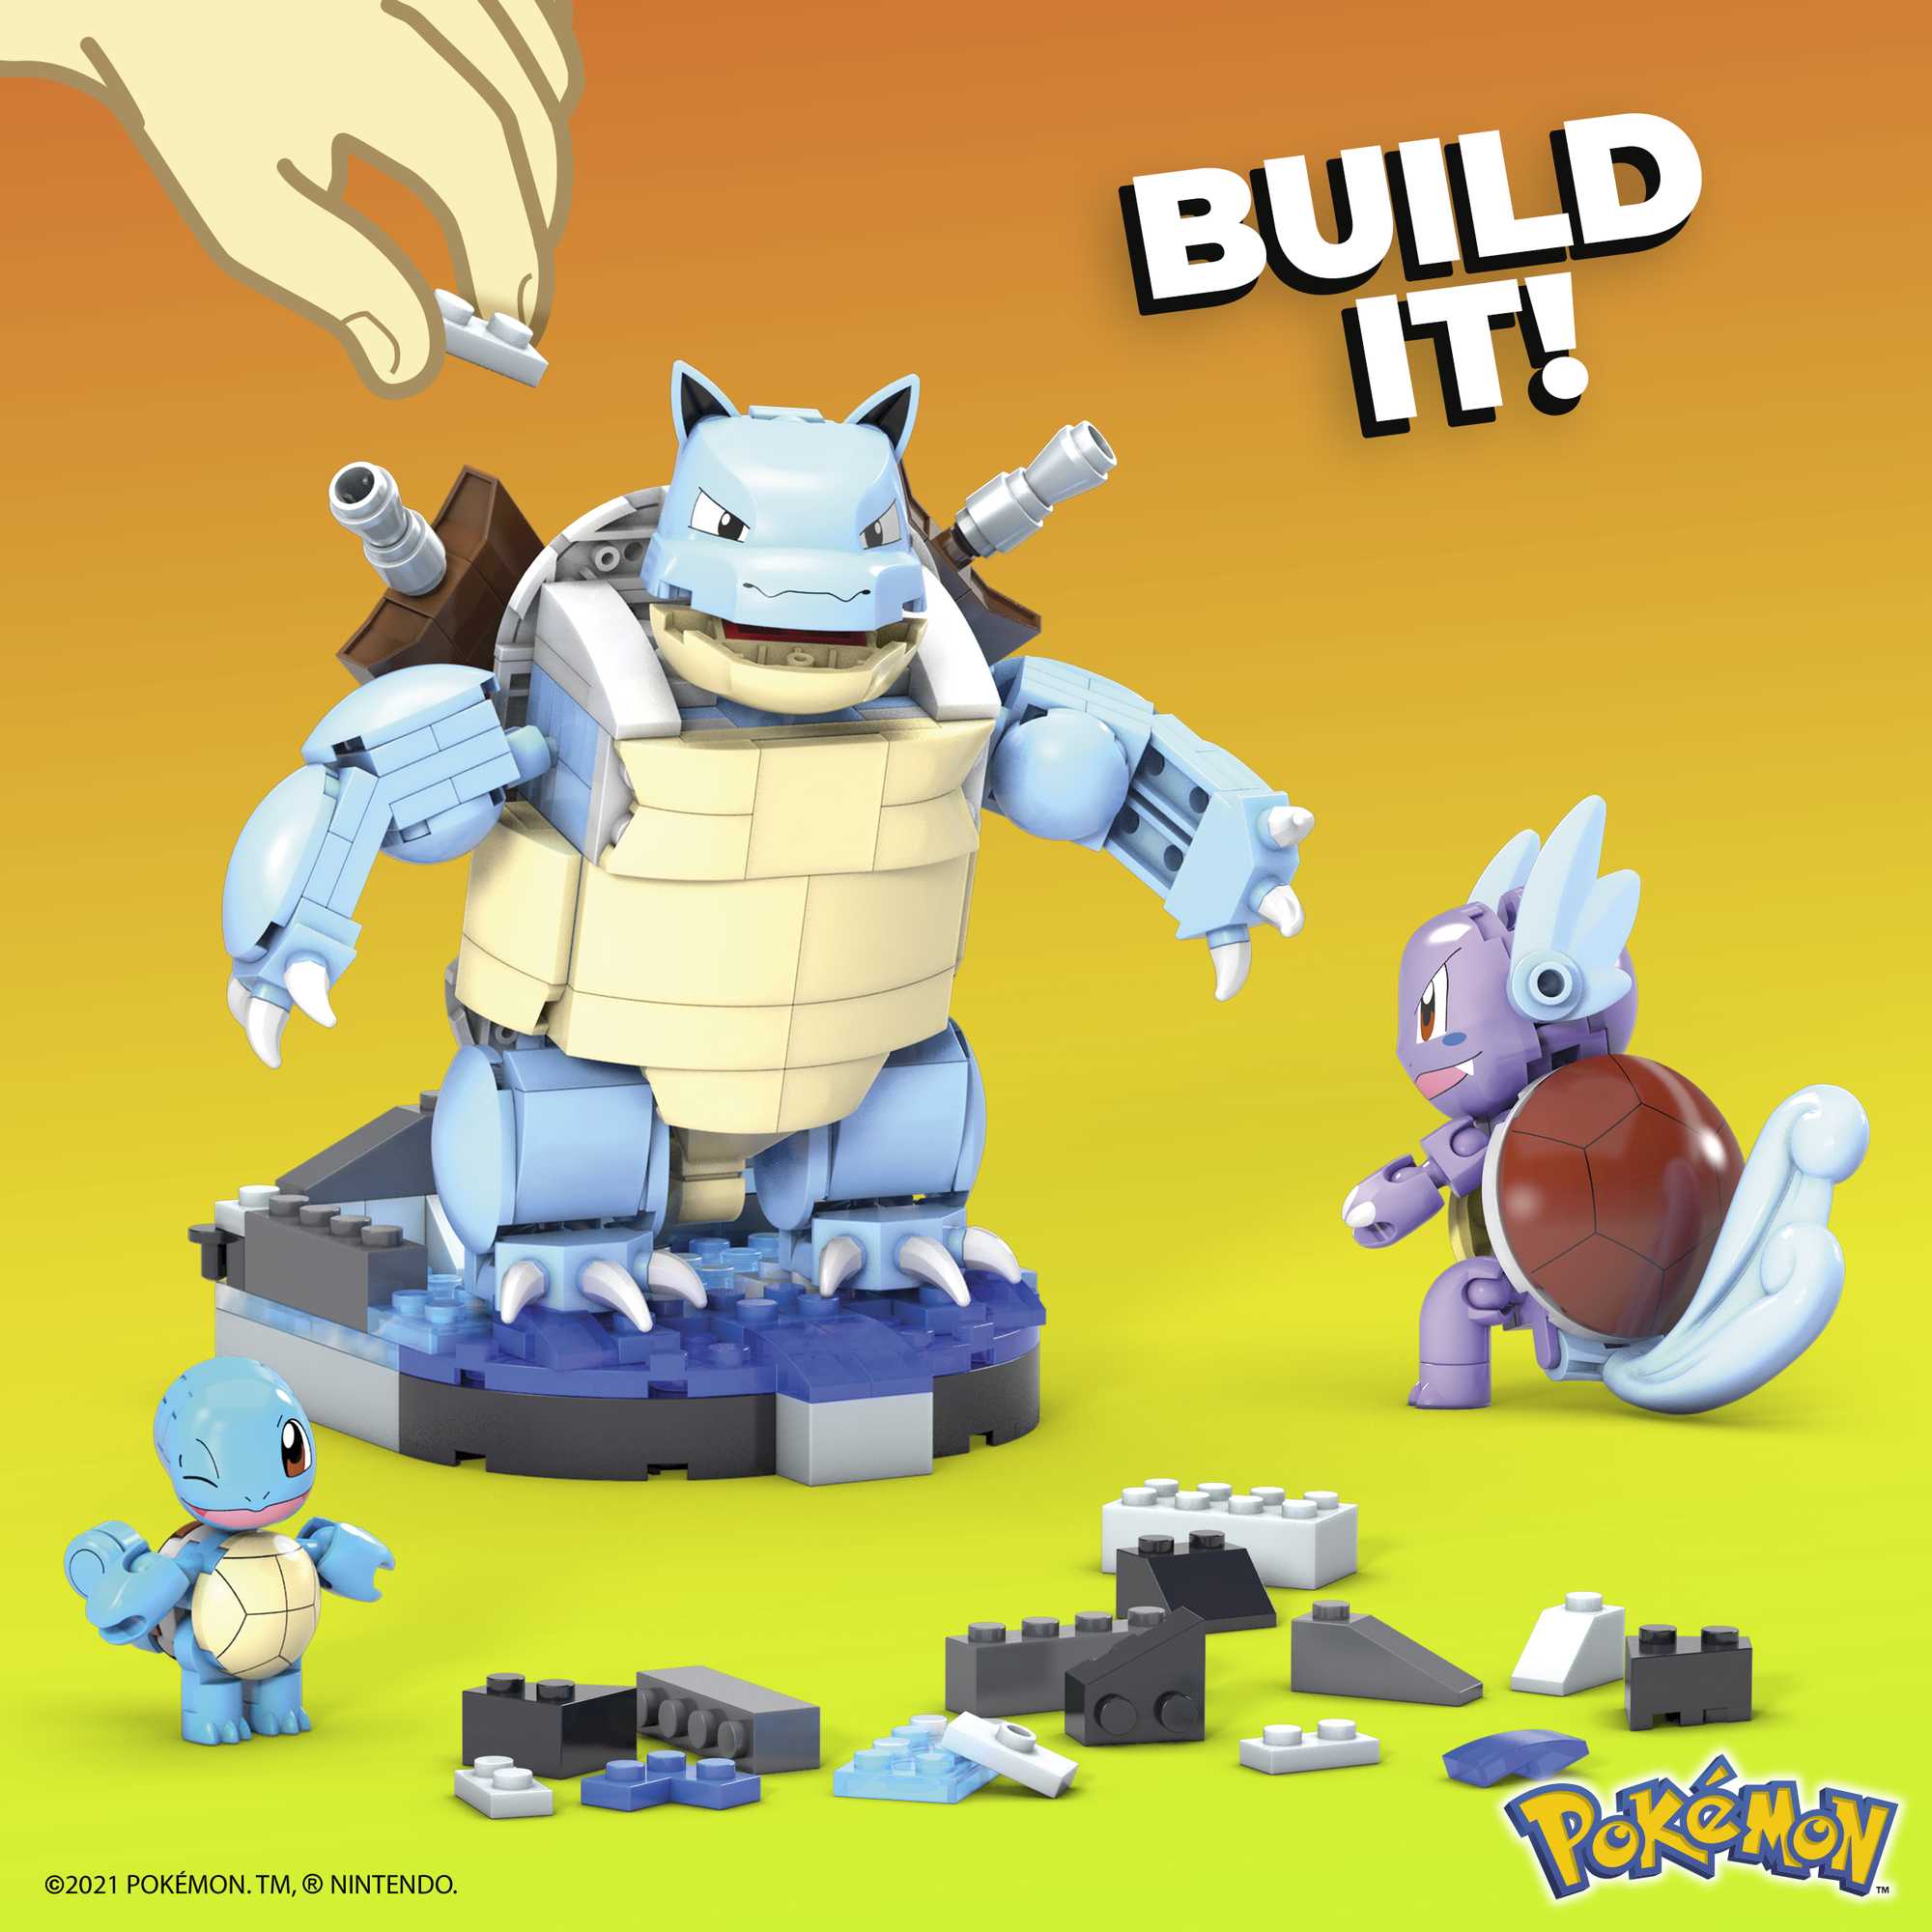 Mega Construx Pokémon Evoluções Eevee - Mattel